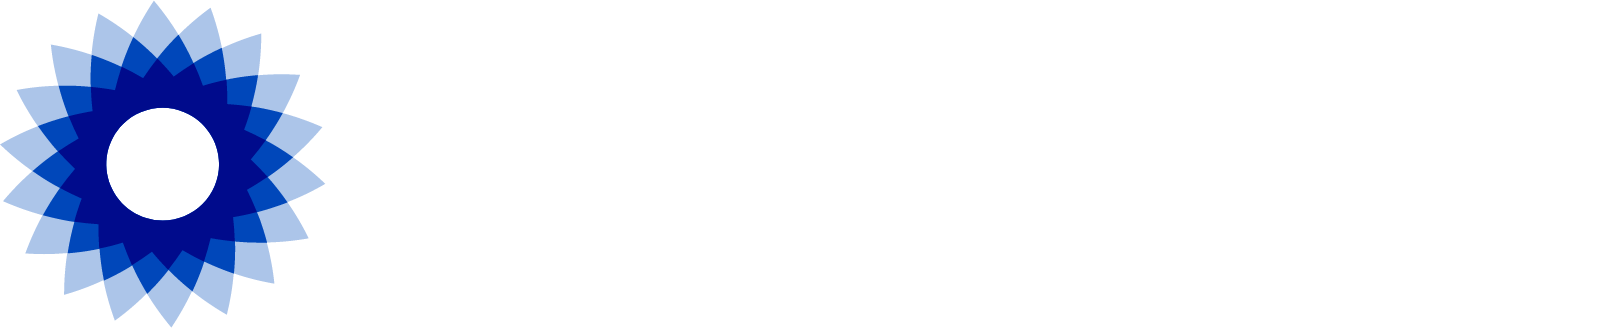 BrightSphere Investment Group logo large for dark backgrounds (transparent PNG)